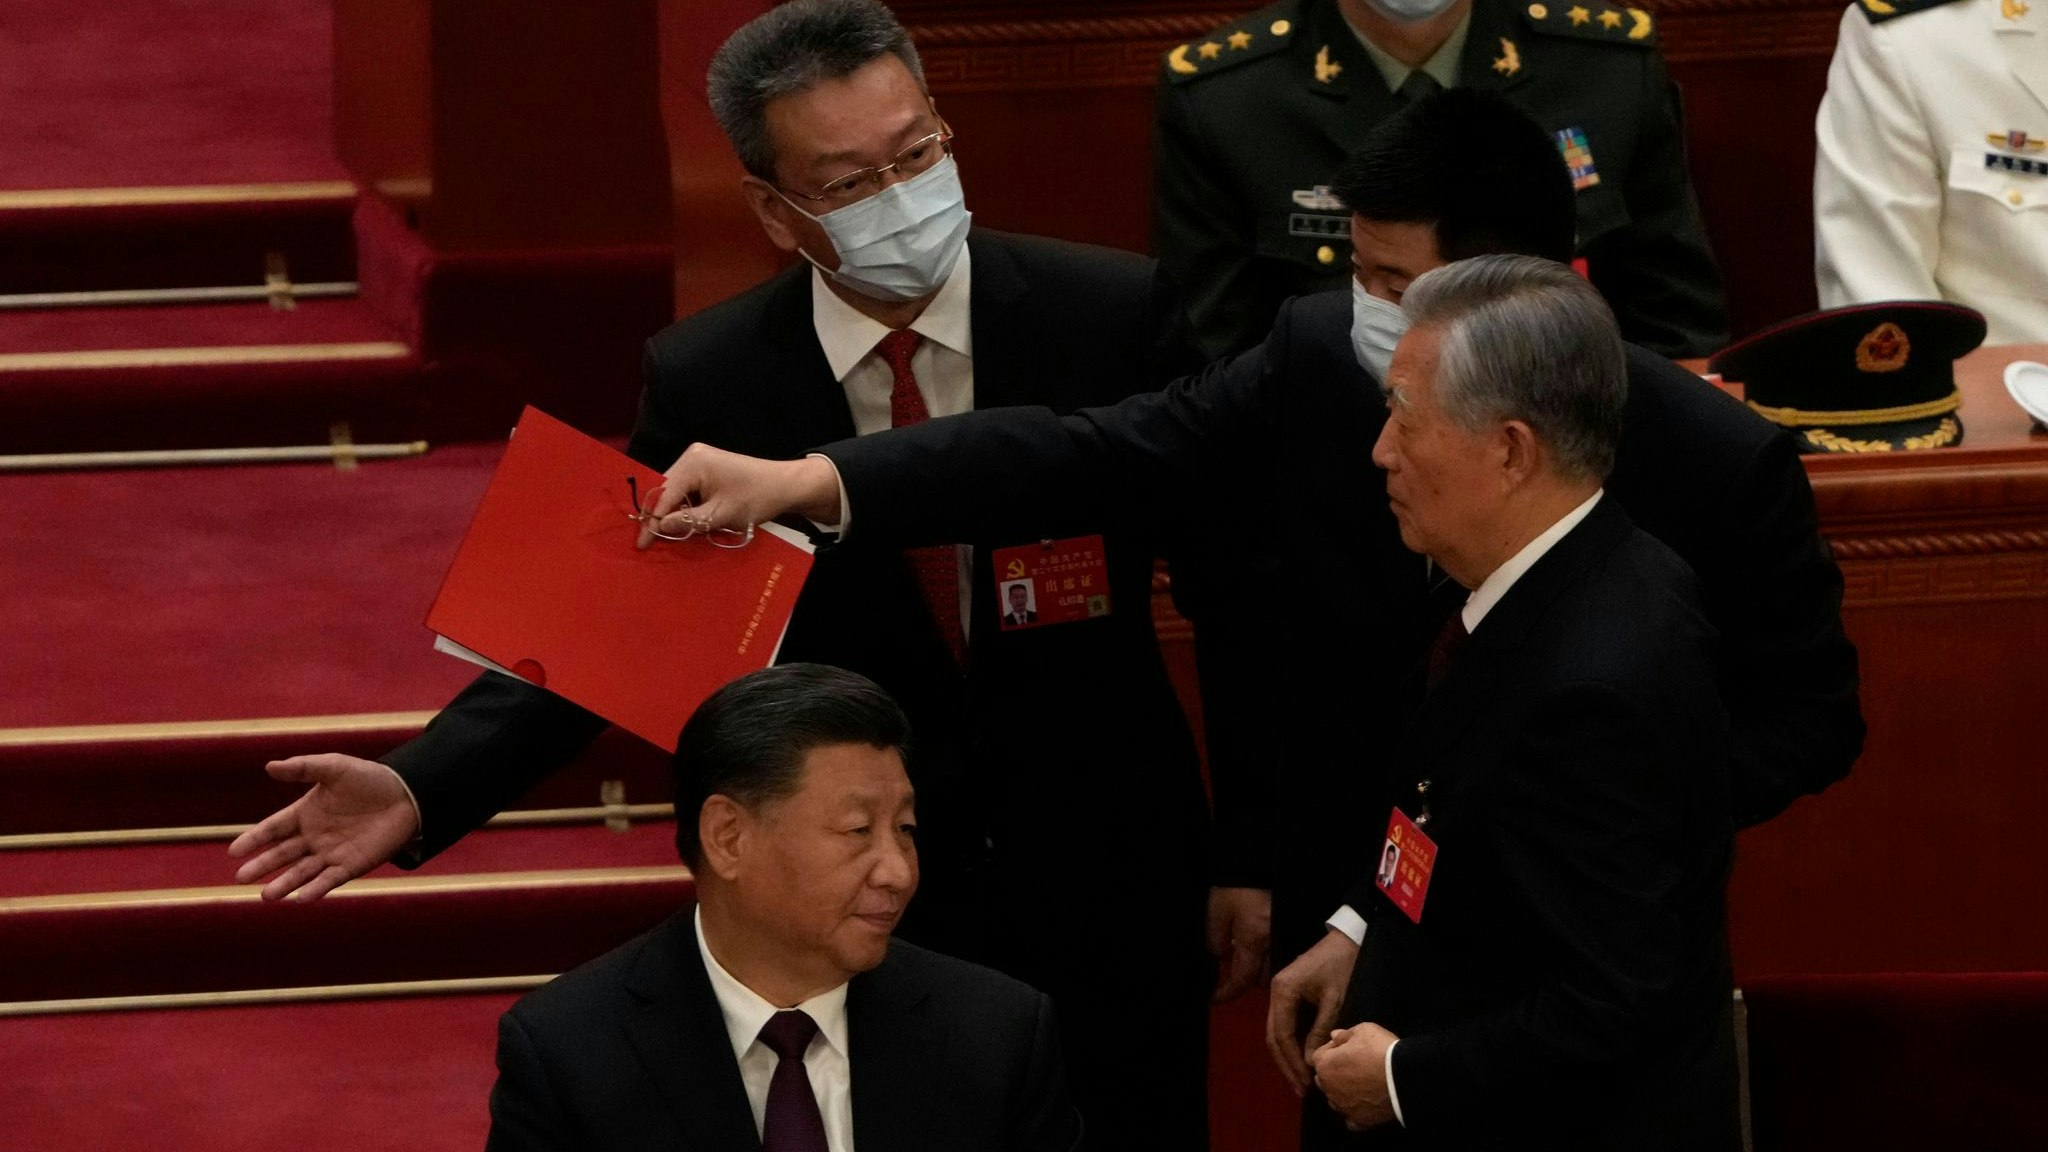 Chinas Ex-Präsident Hu Jintao (r) wird von seinem Platz weg begleitet. Links sitzt Xi Jinping und guckt zu. Foto: dpa/Ng Han Guan